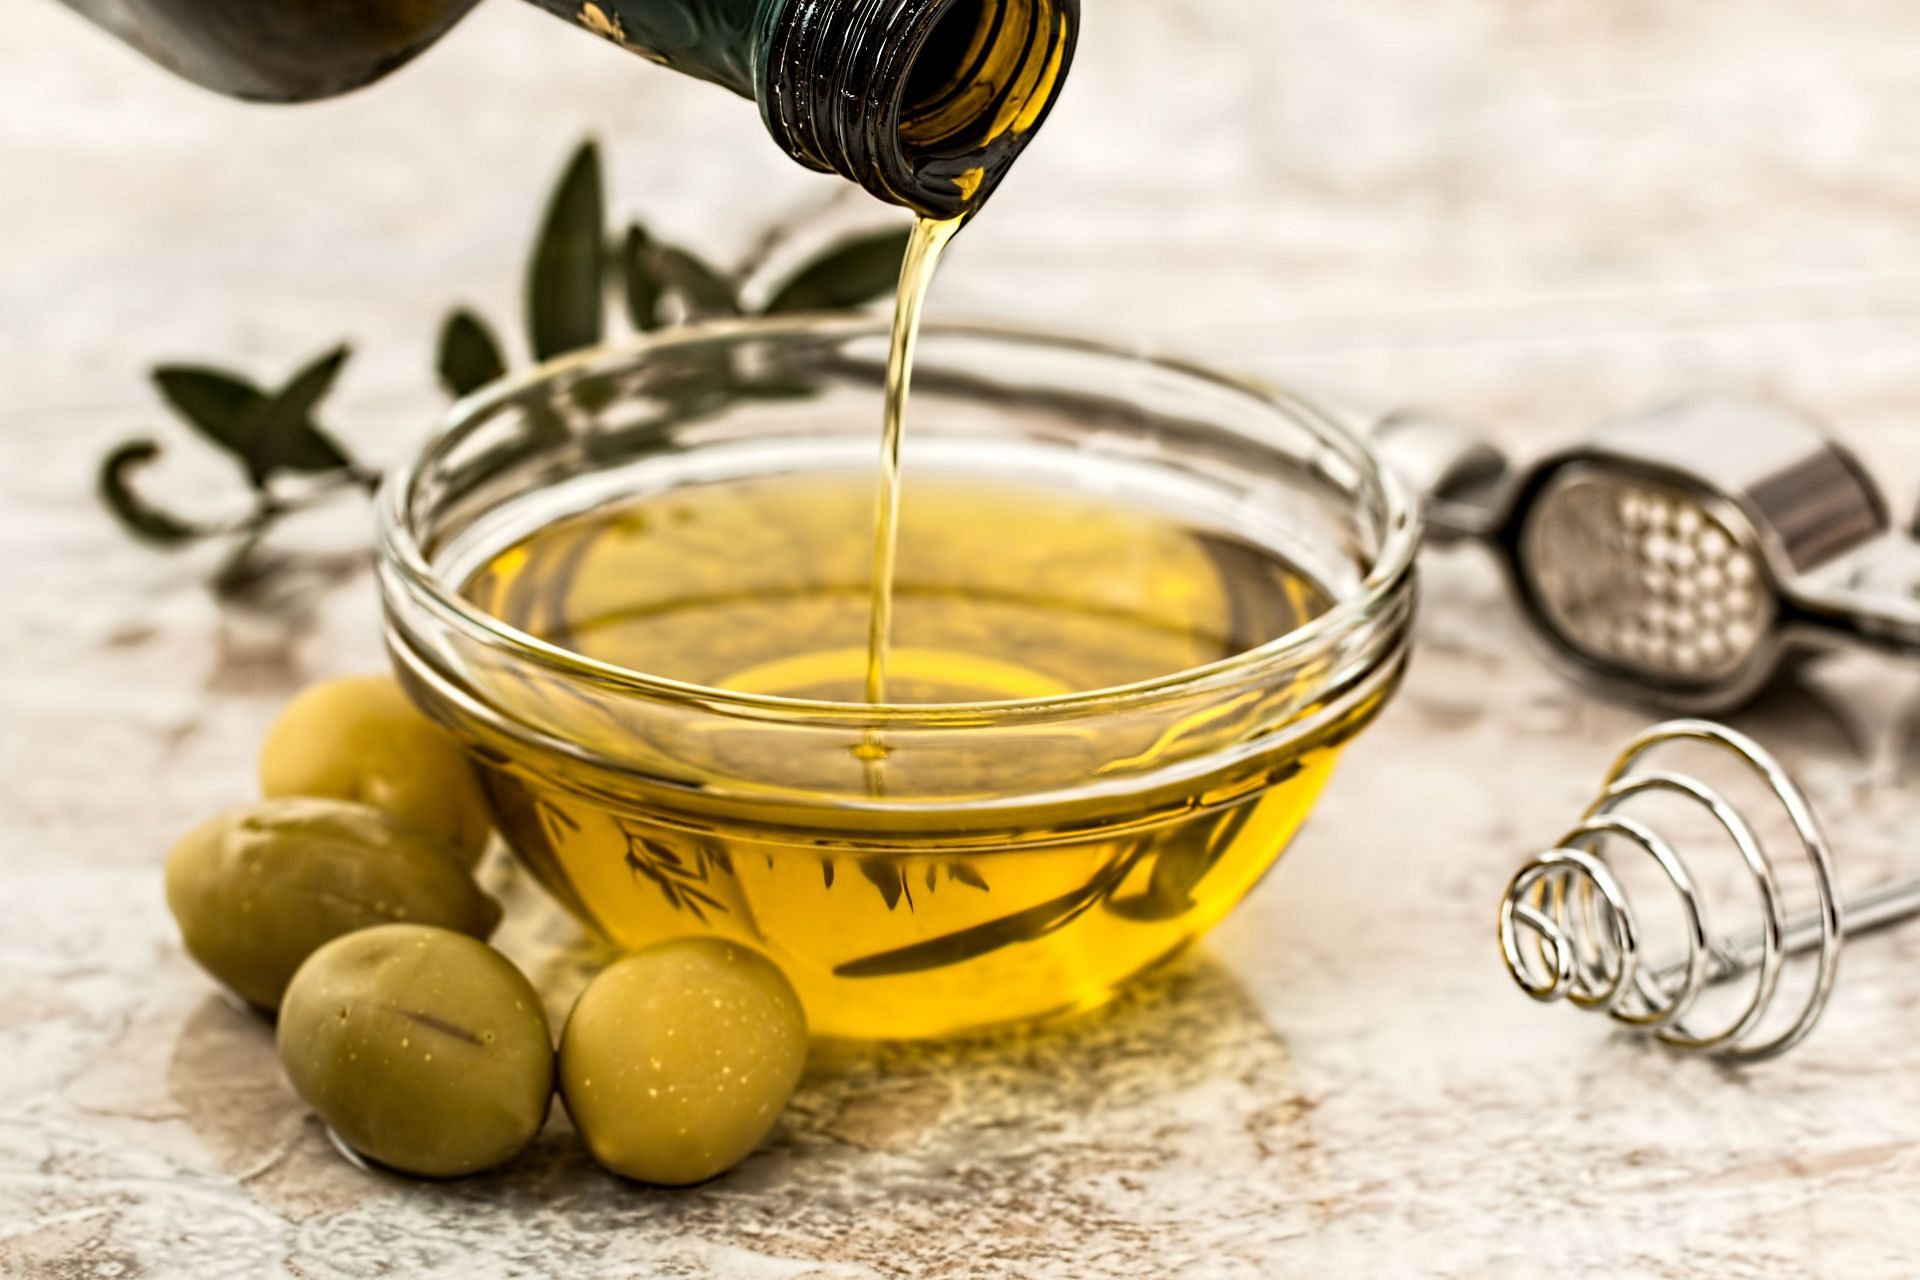 Castor oil good for hair: It stimulates hair growth. (Image via Pexels/ Pixabay)